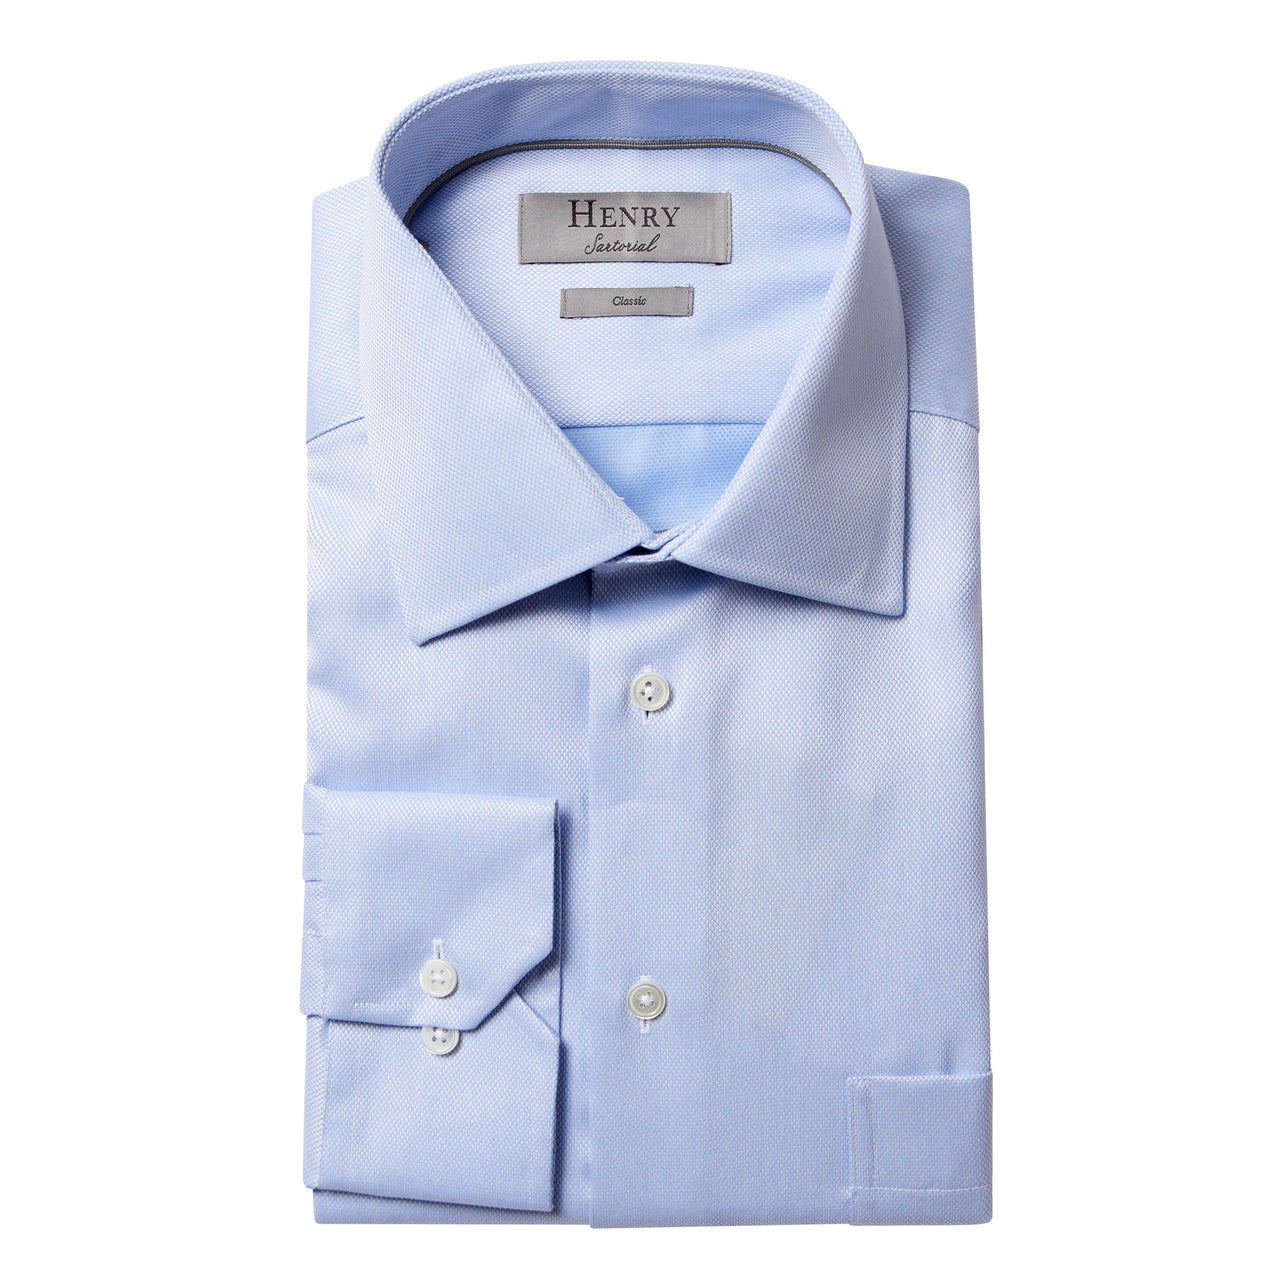 HENRY SARTORIAL Plain Oxford Business Shirt Single Cuff Classic Fit POWDER BLUE